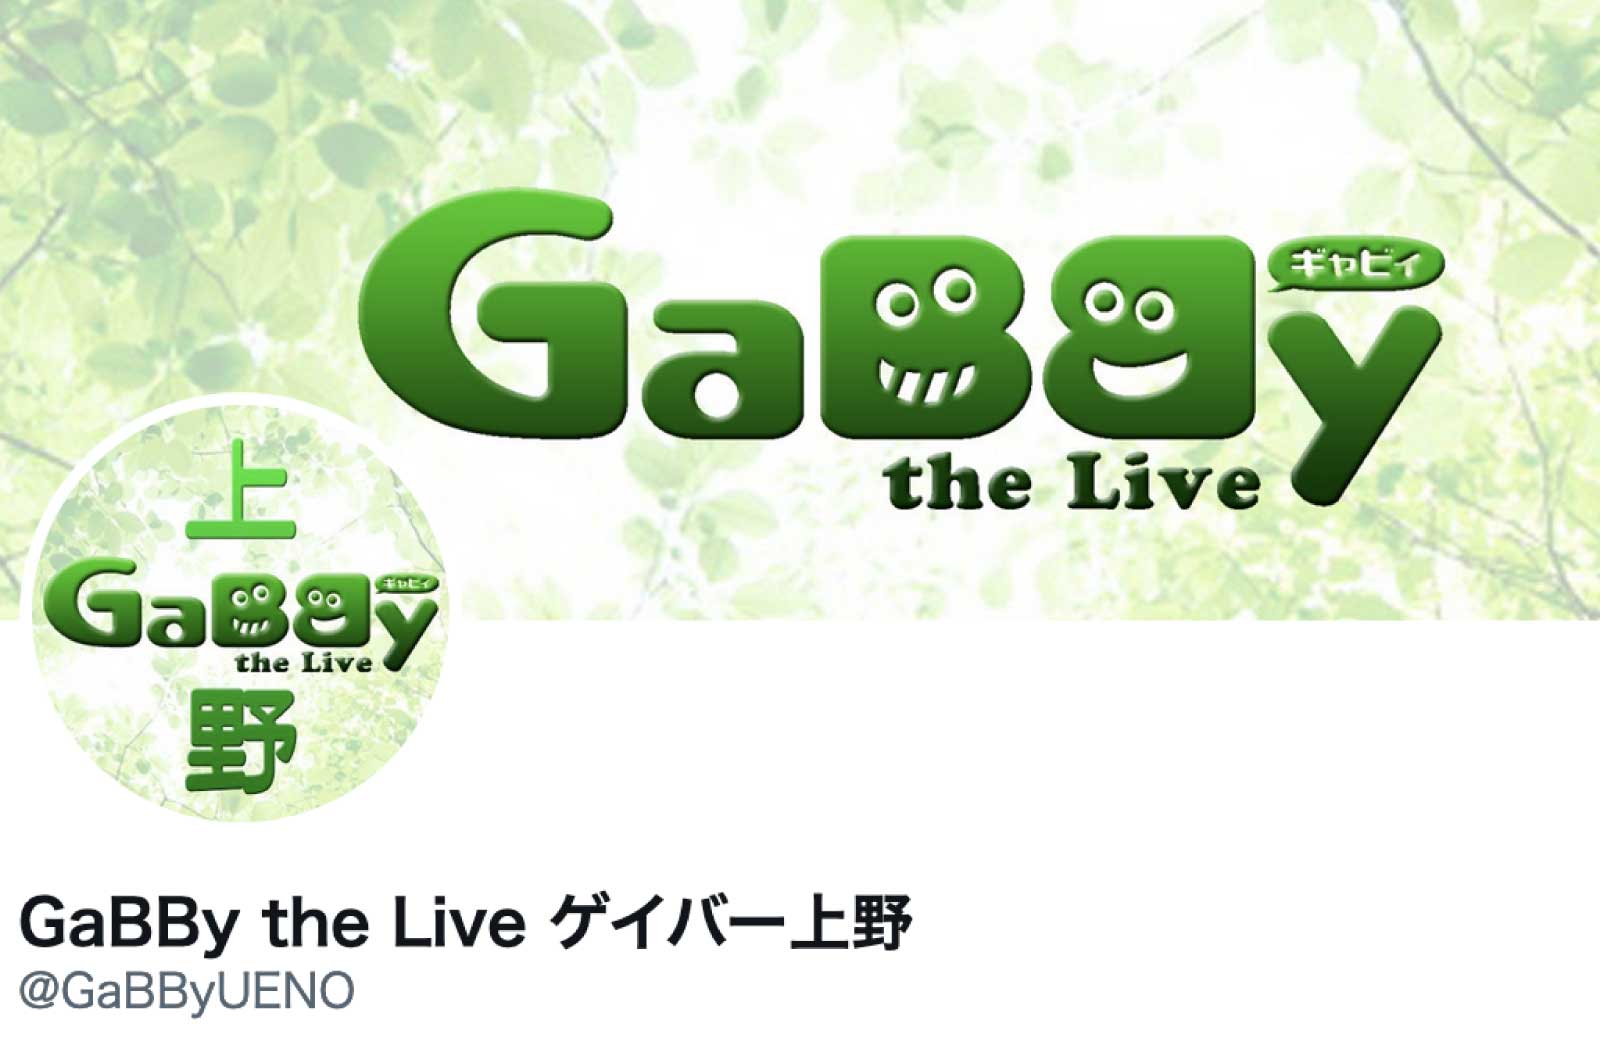 GaBBy the Live!（上野ギャビィ）